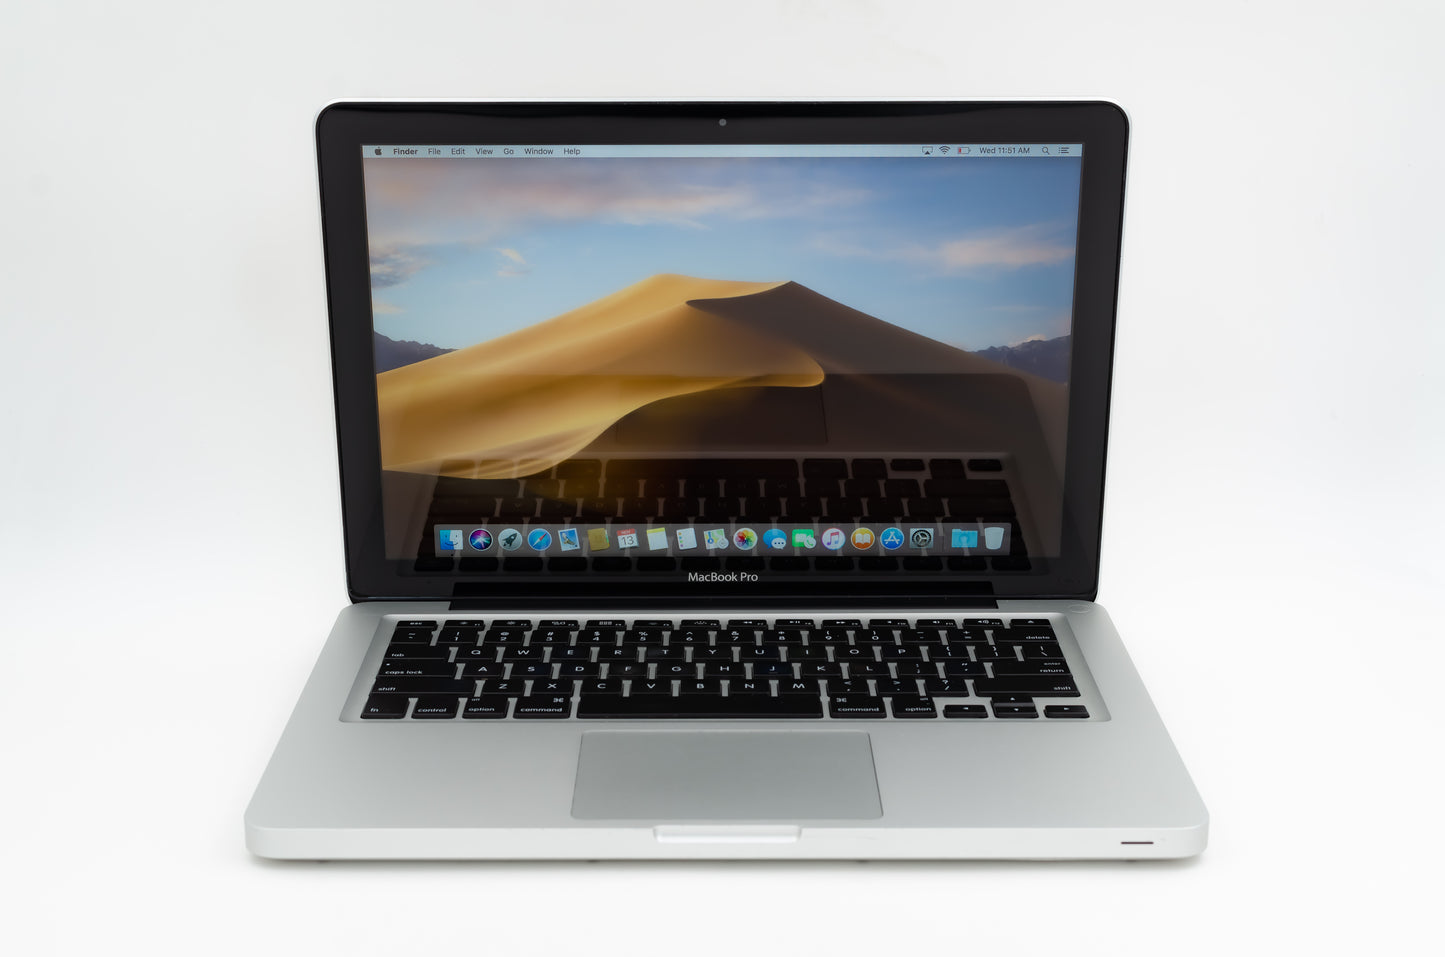 apple-early-2013-13.3-inch-macbook-pro-a1425-aluminum-dci7 - 3ghz processor, 8gb ram, hd 4000 - 512mb gpu-me662ll/a-1